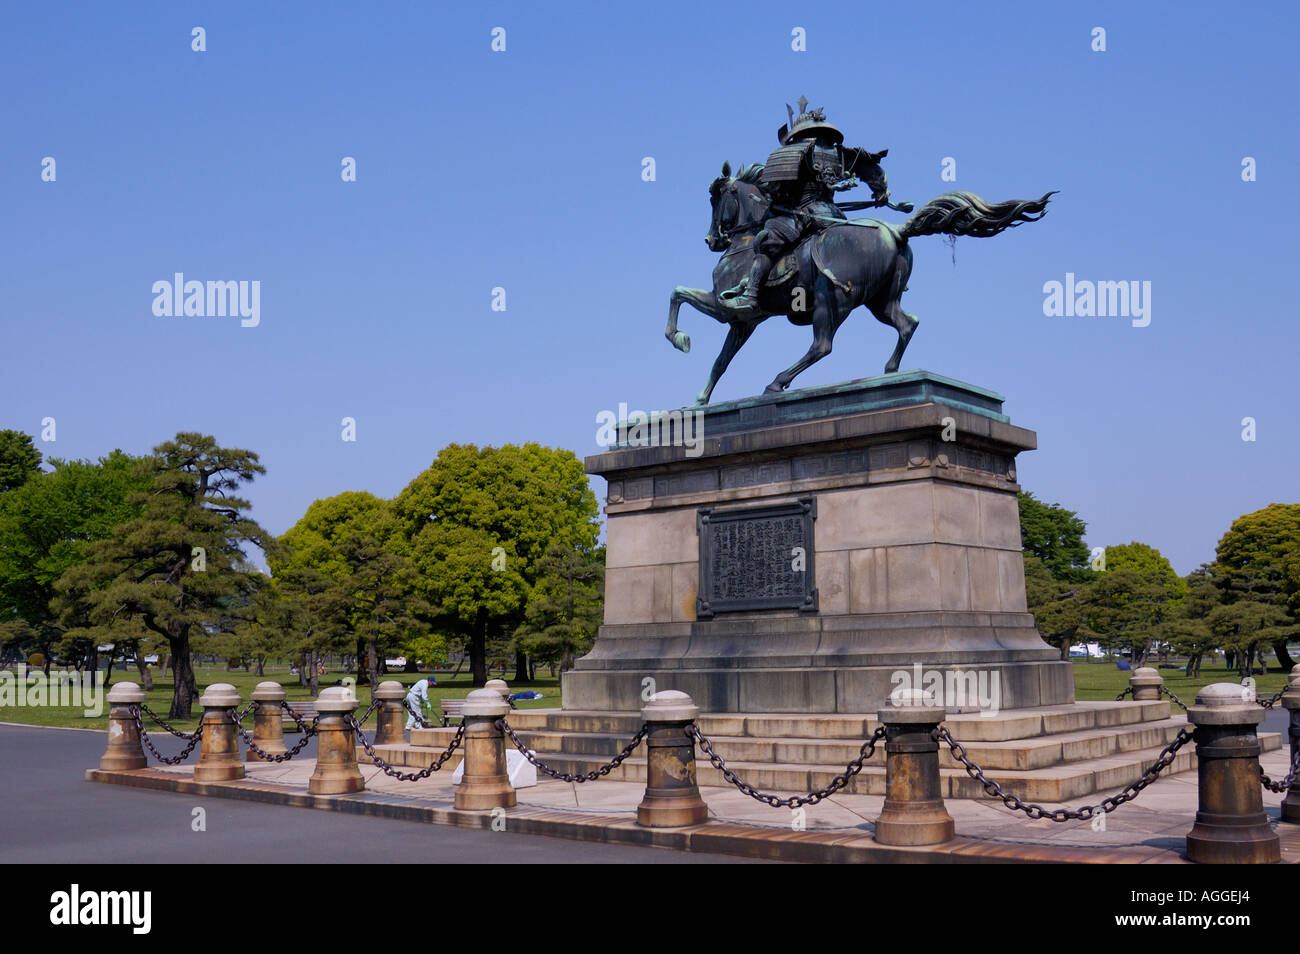 Jardin du Palais Impérial, Kokyo, statue de Kusunoki Masashige (Samurai Warrior), Tokyo, Japon Banque D'Images